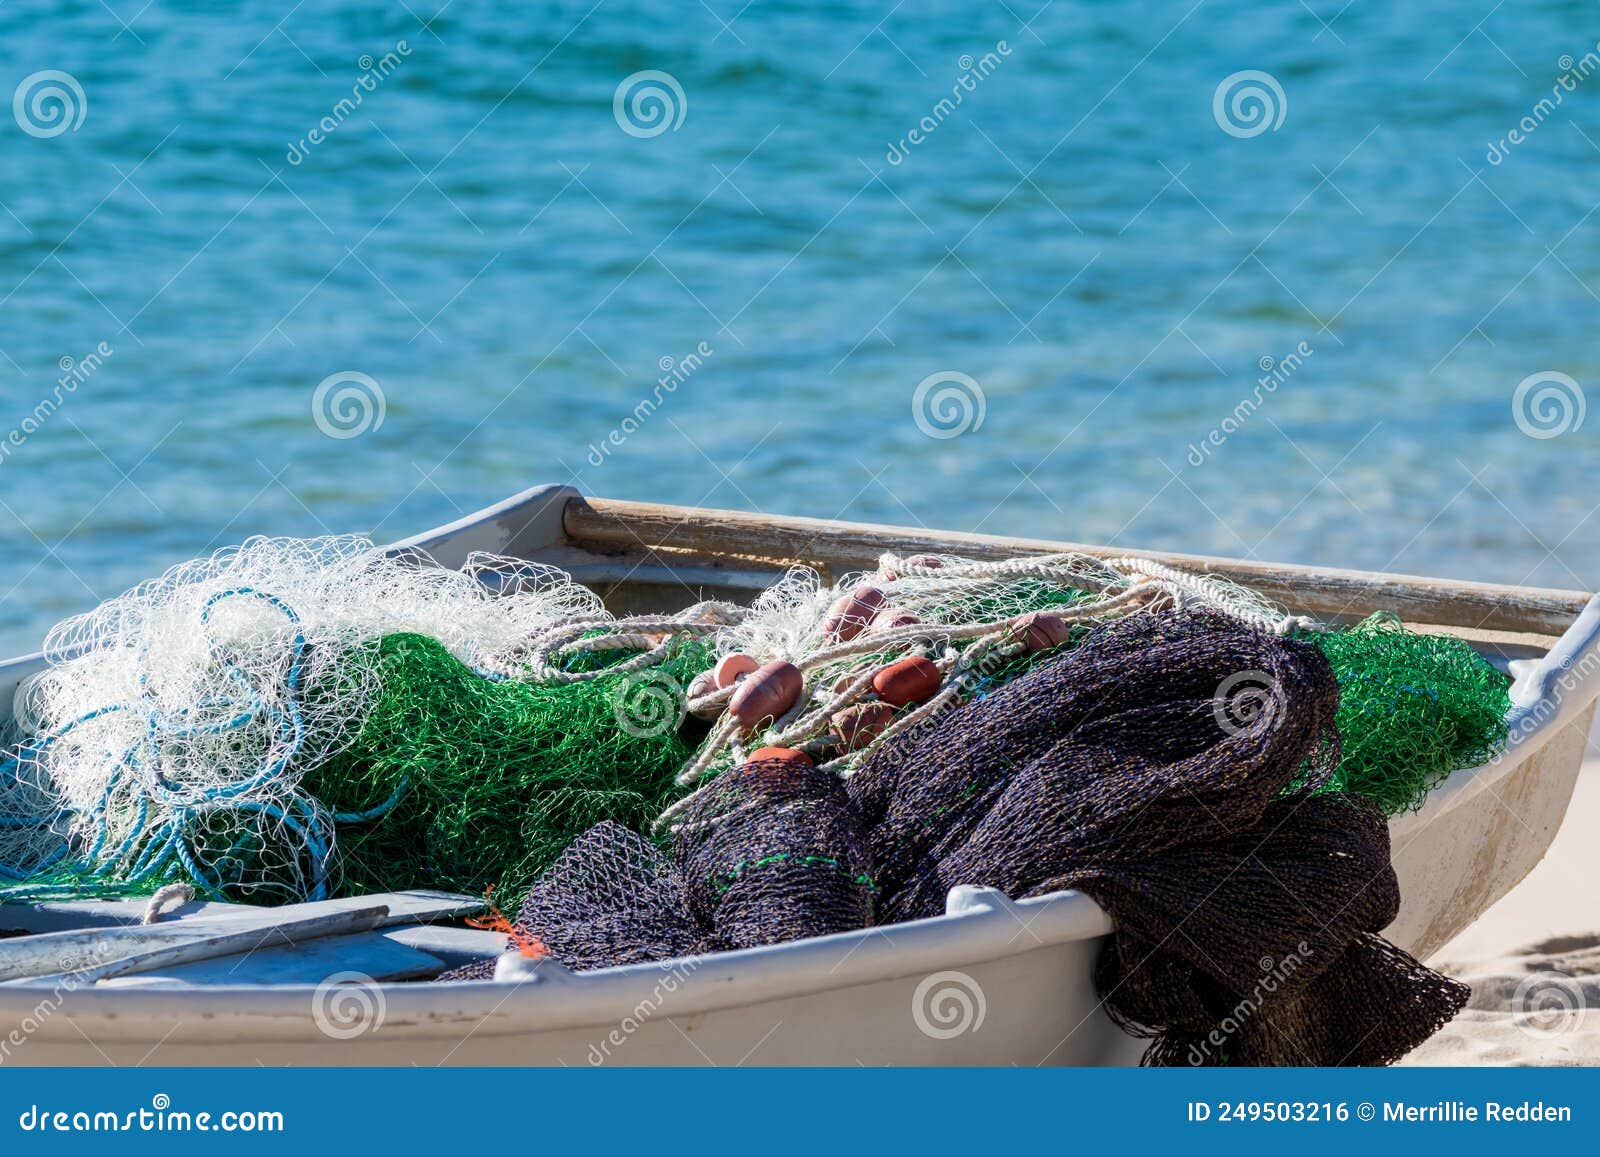 https://thumbs.dreamstime.com/z/fishing-nets-tin-boat-shore-range-fishing-nets-weights-metal-boat-beach-shoal-bay-port-249503216.jpg